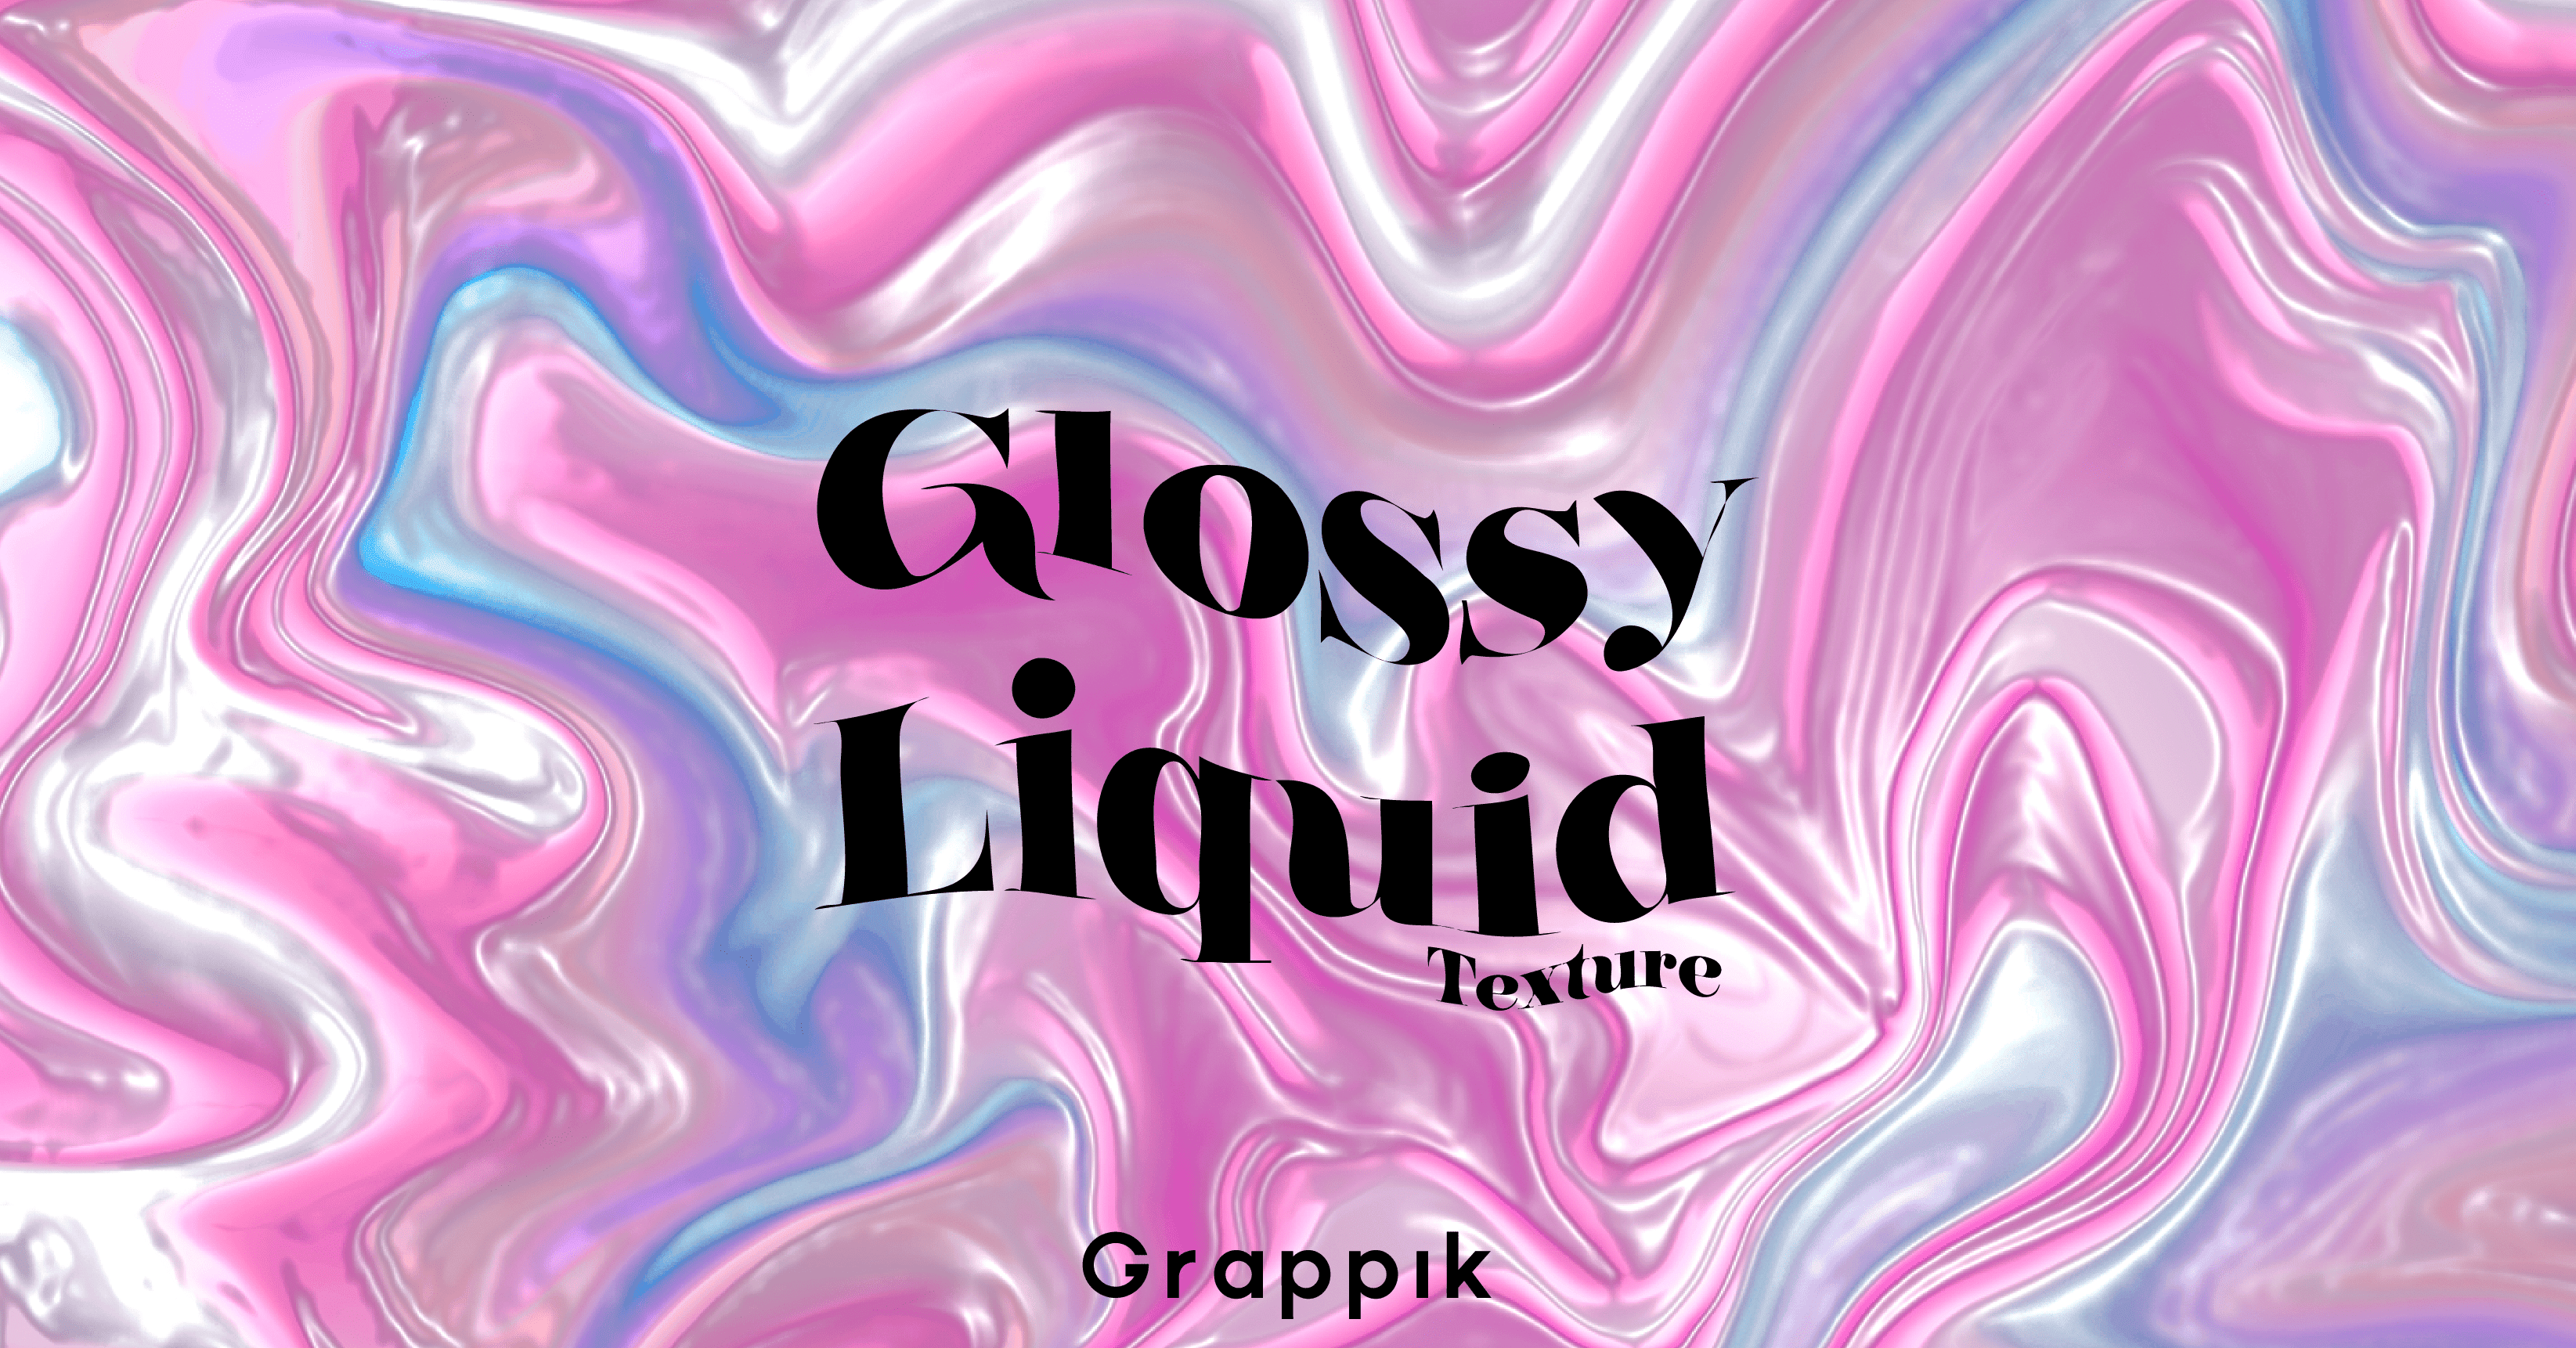 Glossy Liquid Texture